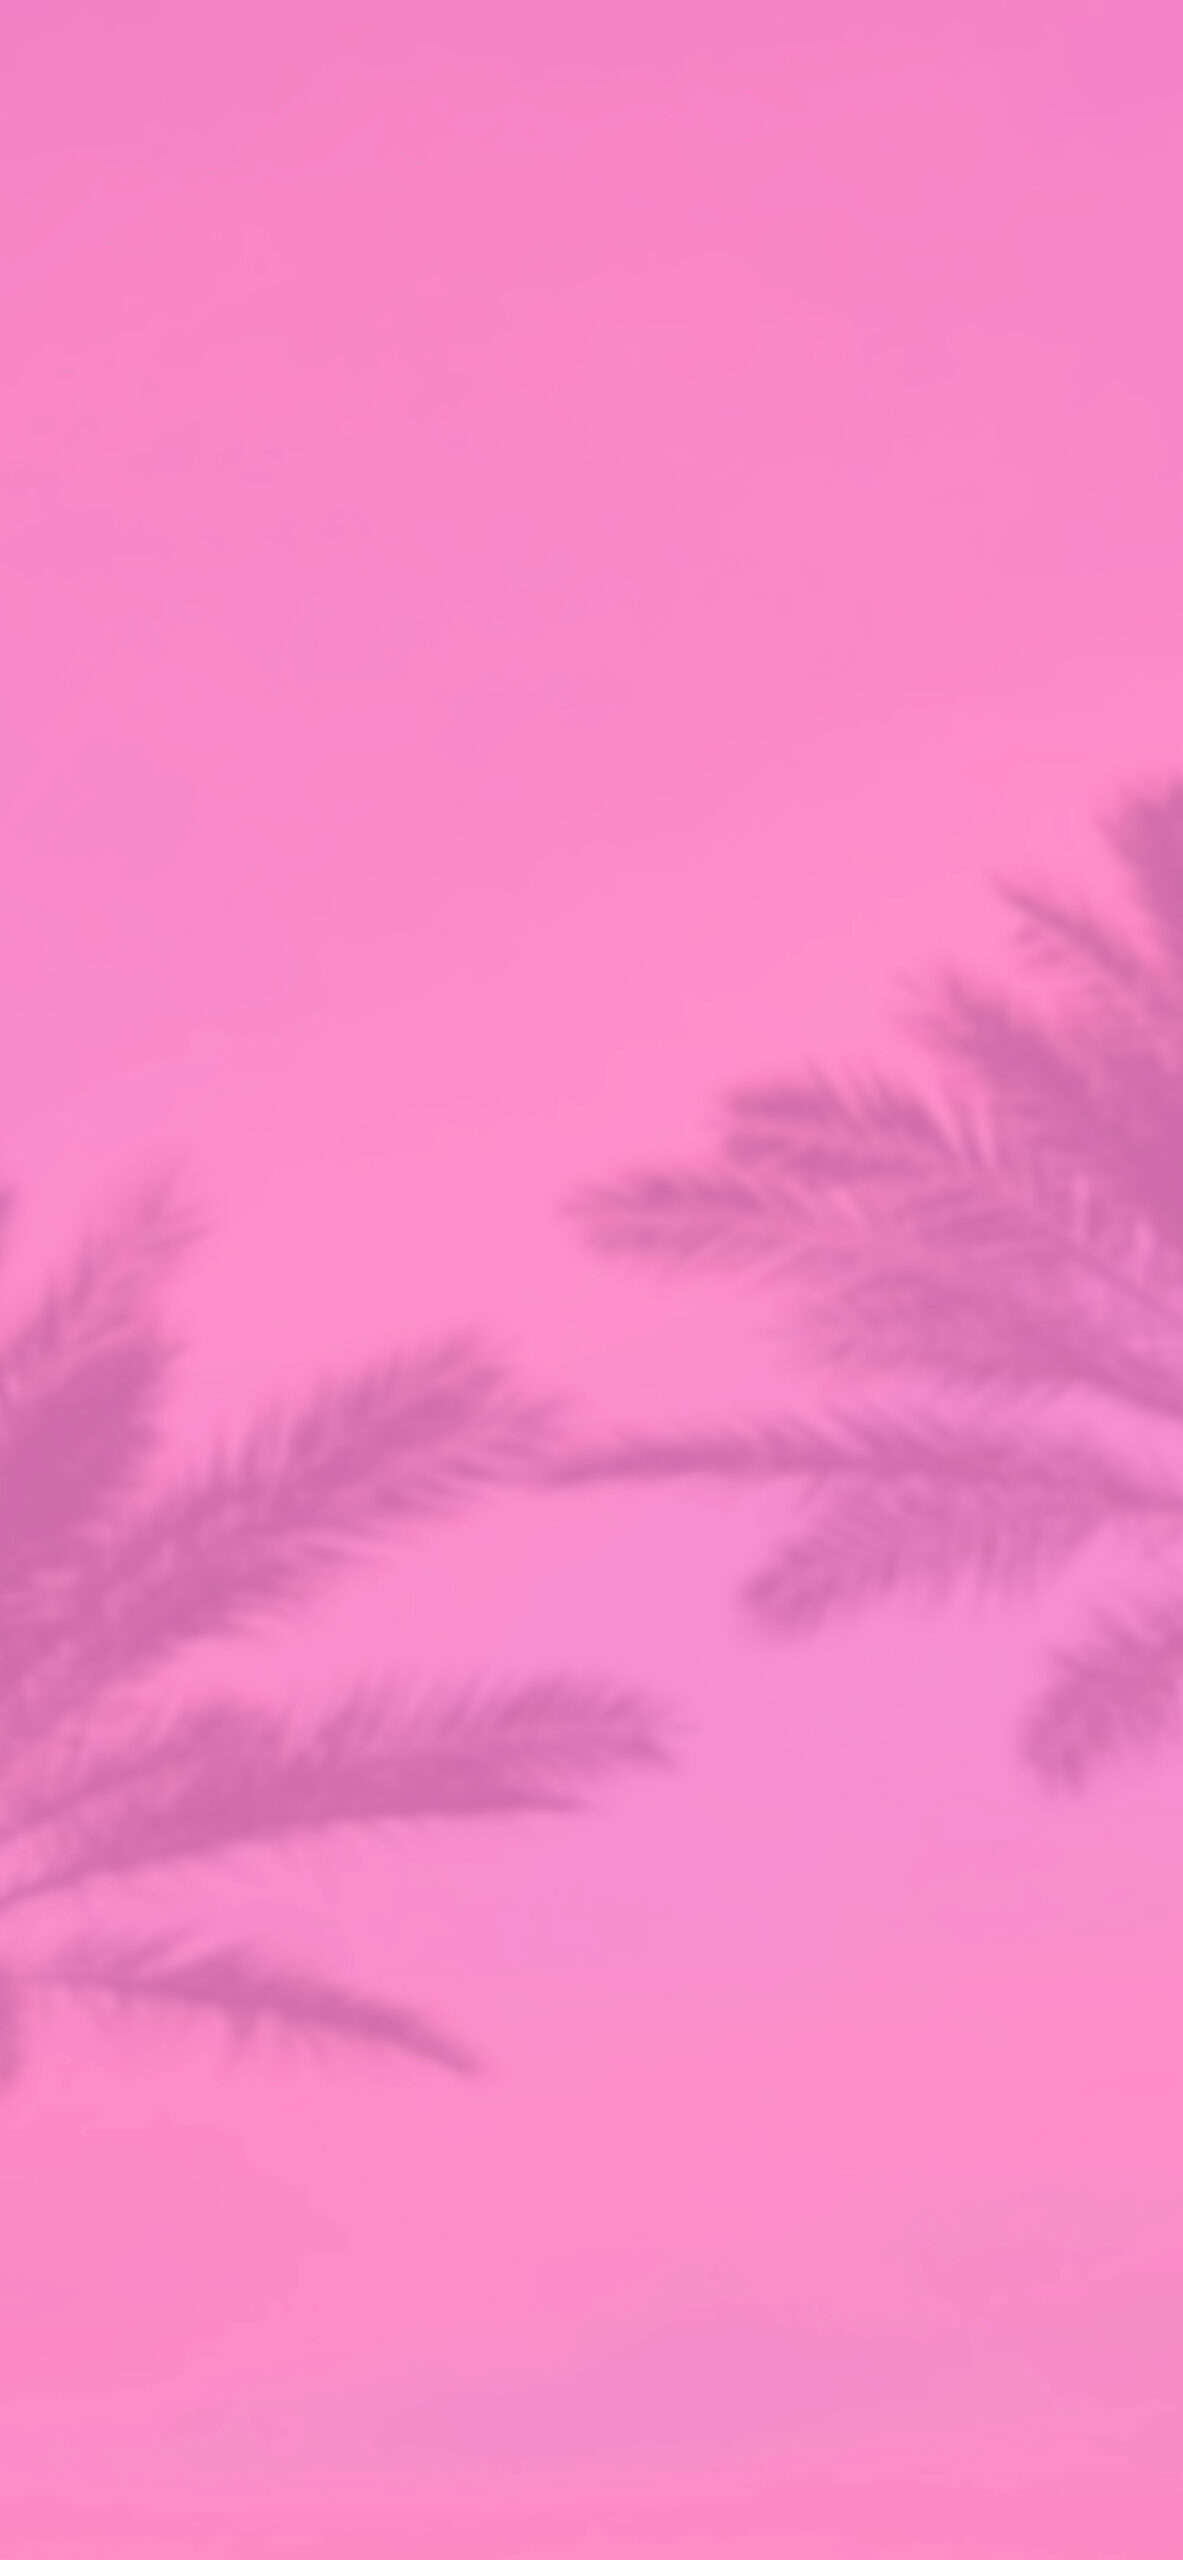 aesthetic pink wallpaper